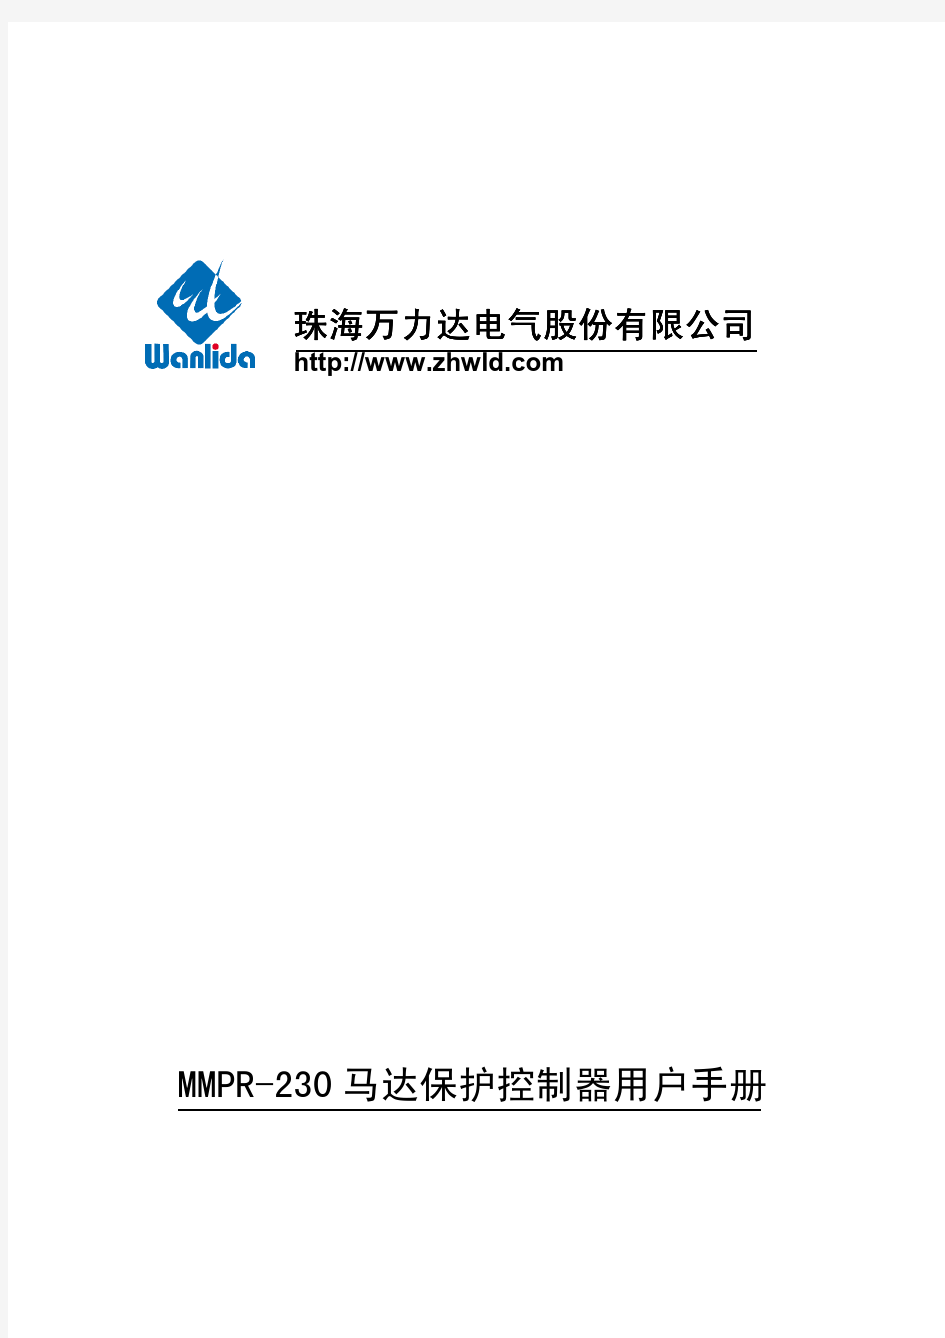 MMPR-230低压电动机保护控制器说明书